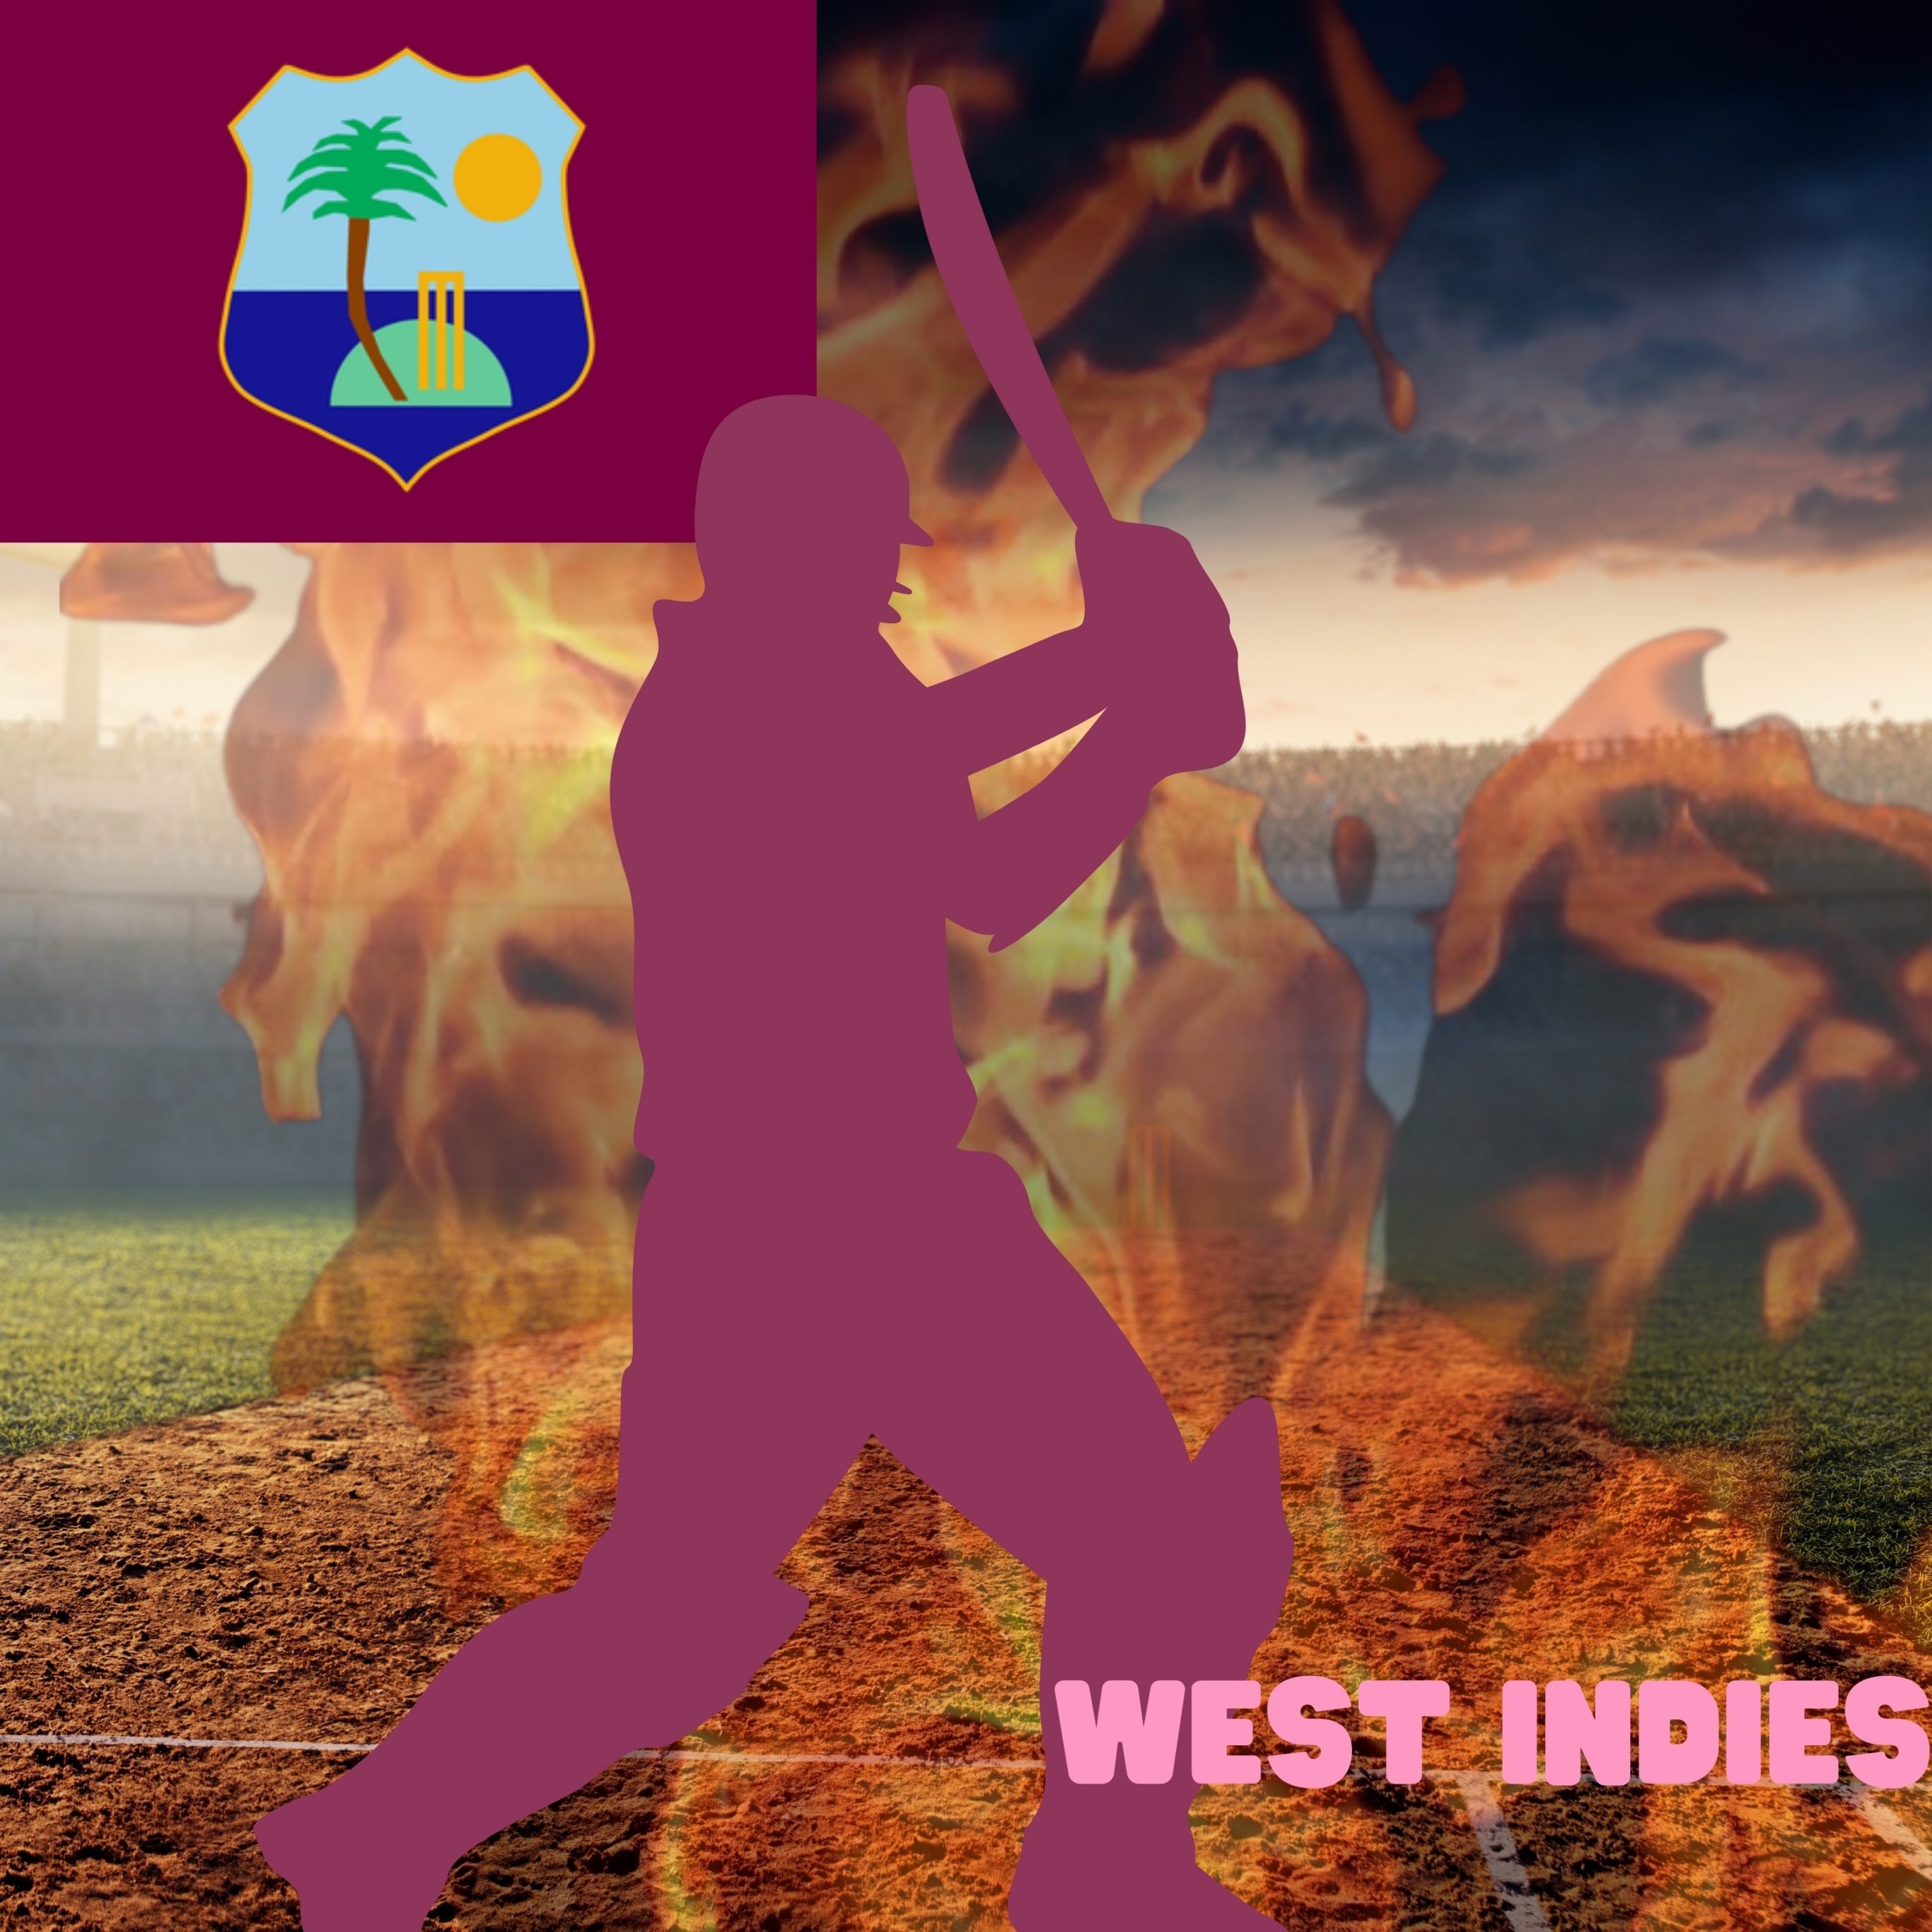 2732x2732 wallpapers 4k iPad Pro West Indies Cricket Stadium iPad Wallpaper 2732x2732 pixels resolution